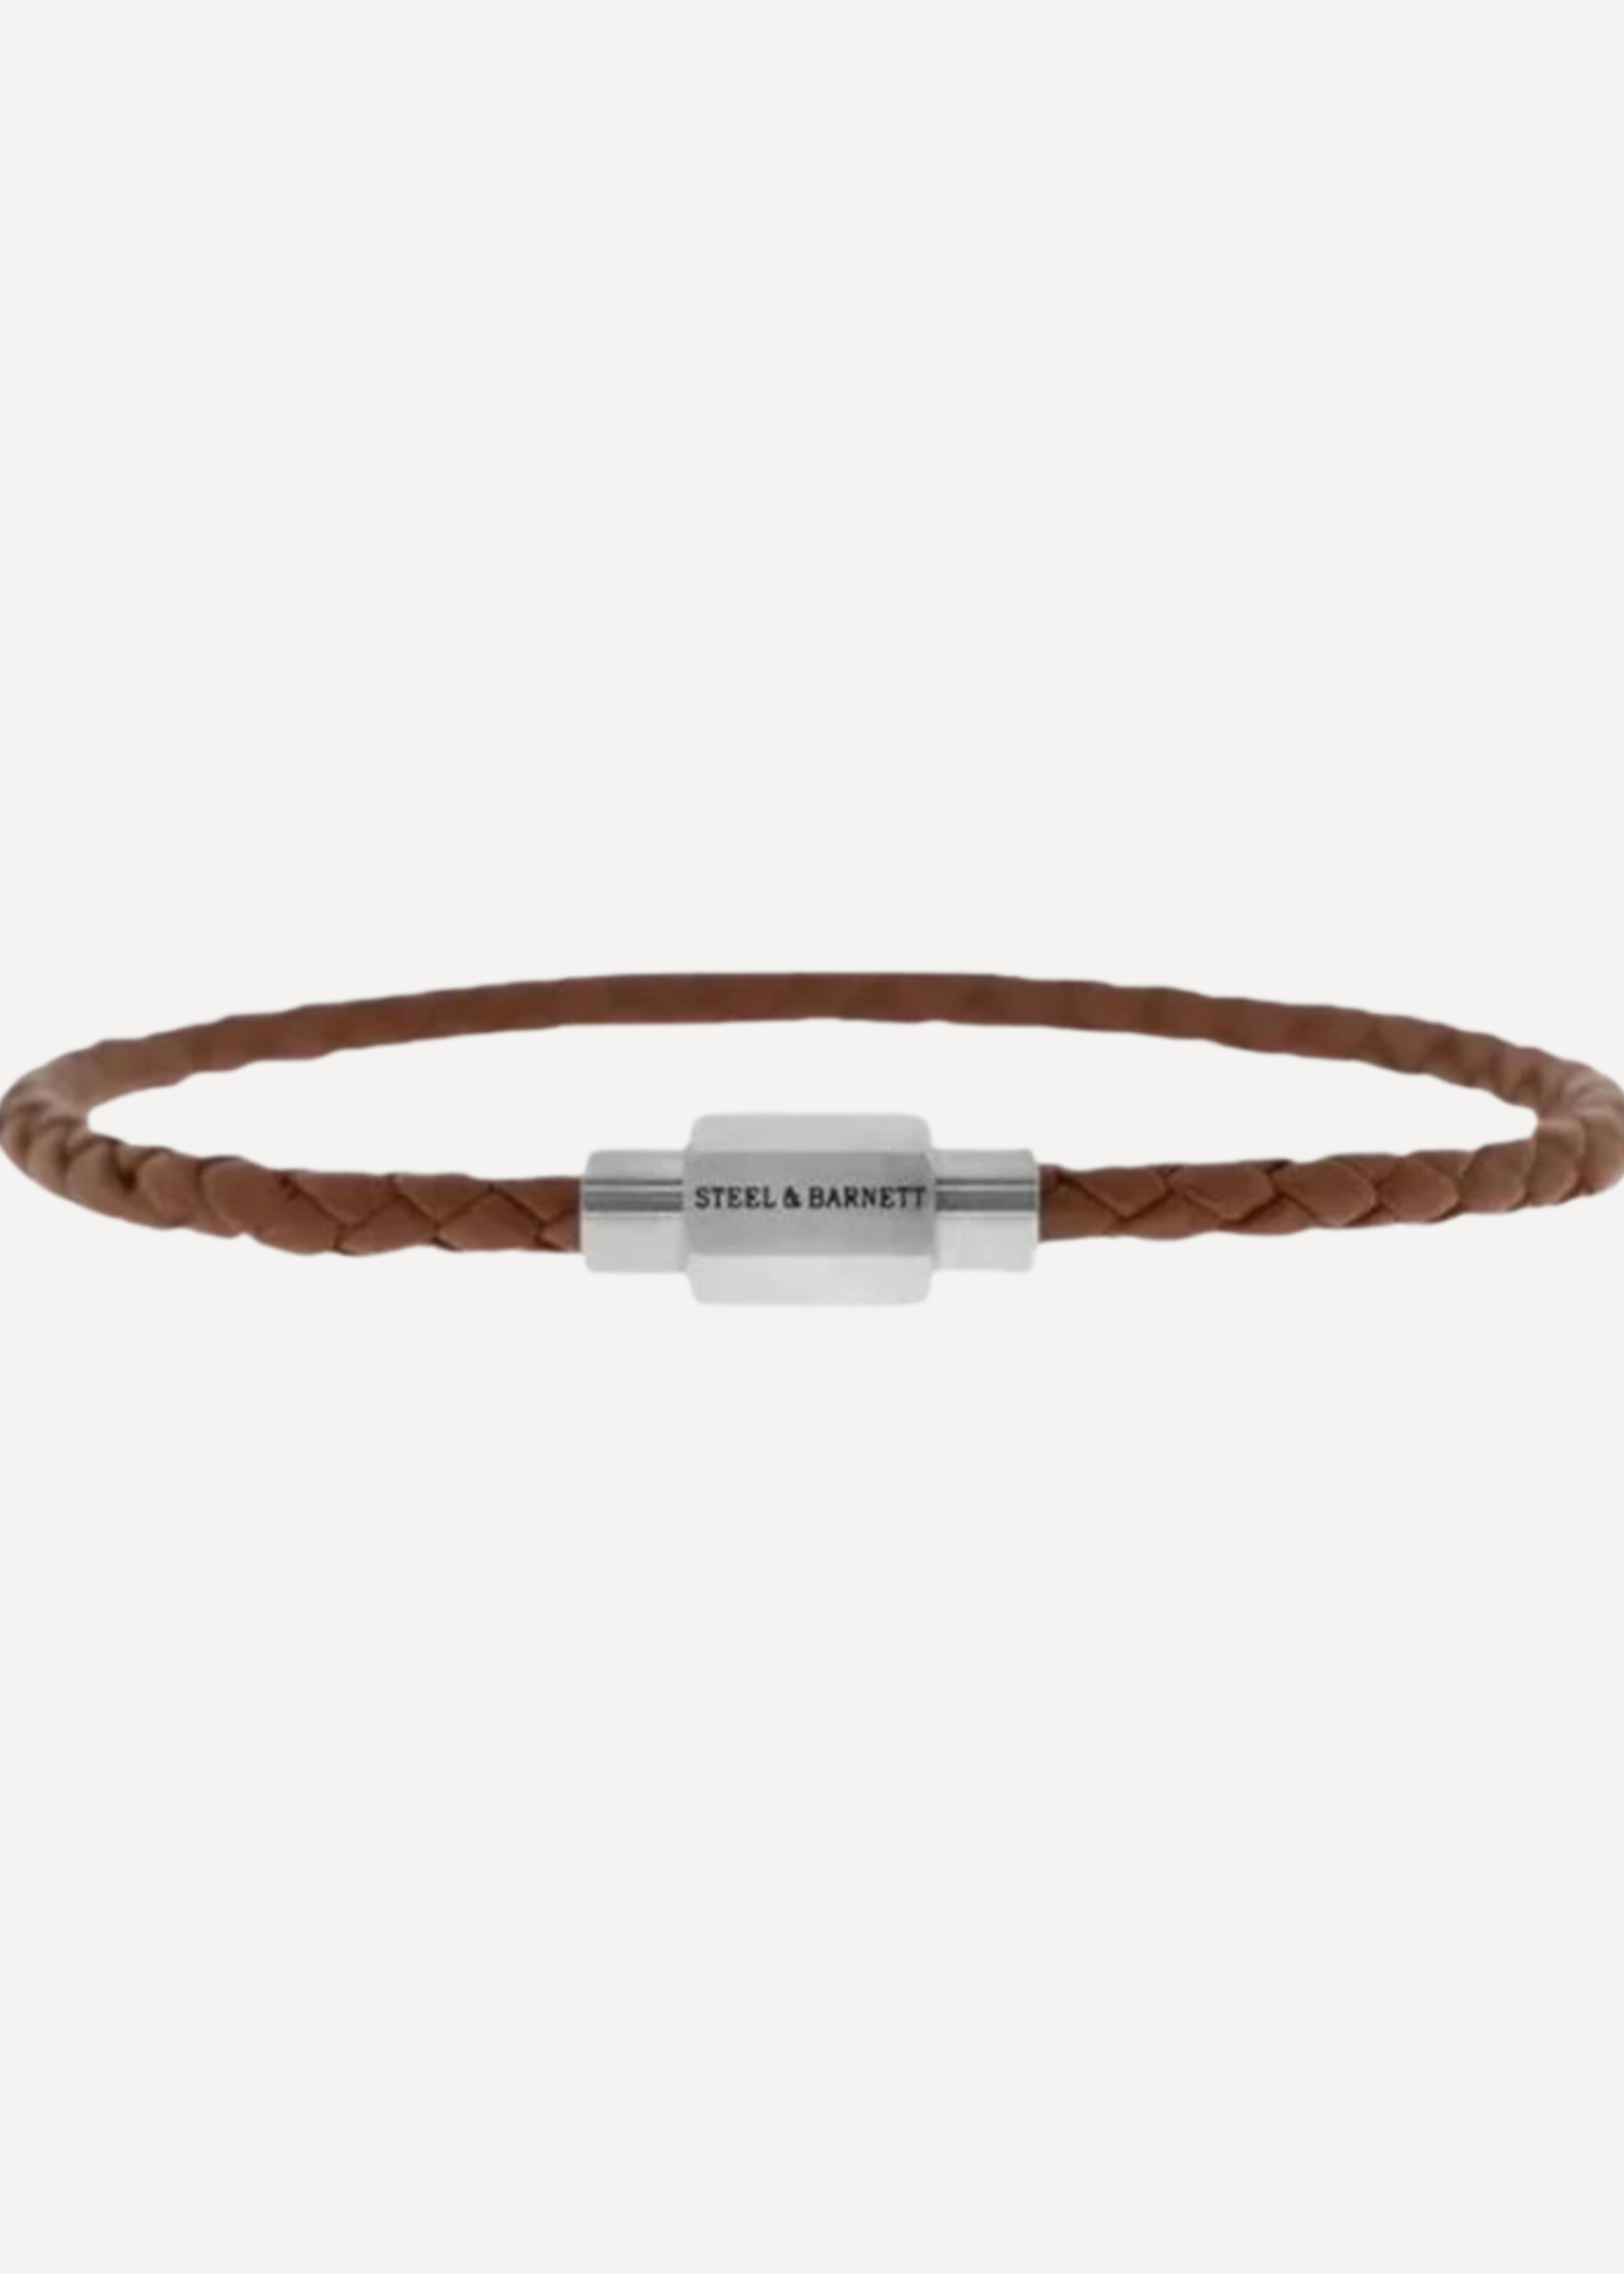 STEEL & BARNETT Leather Bracelet LUKE LANDON - Peanut